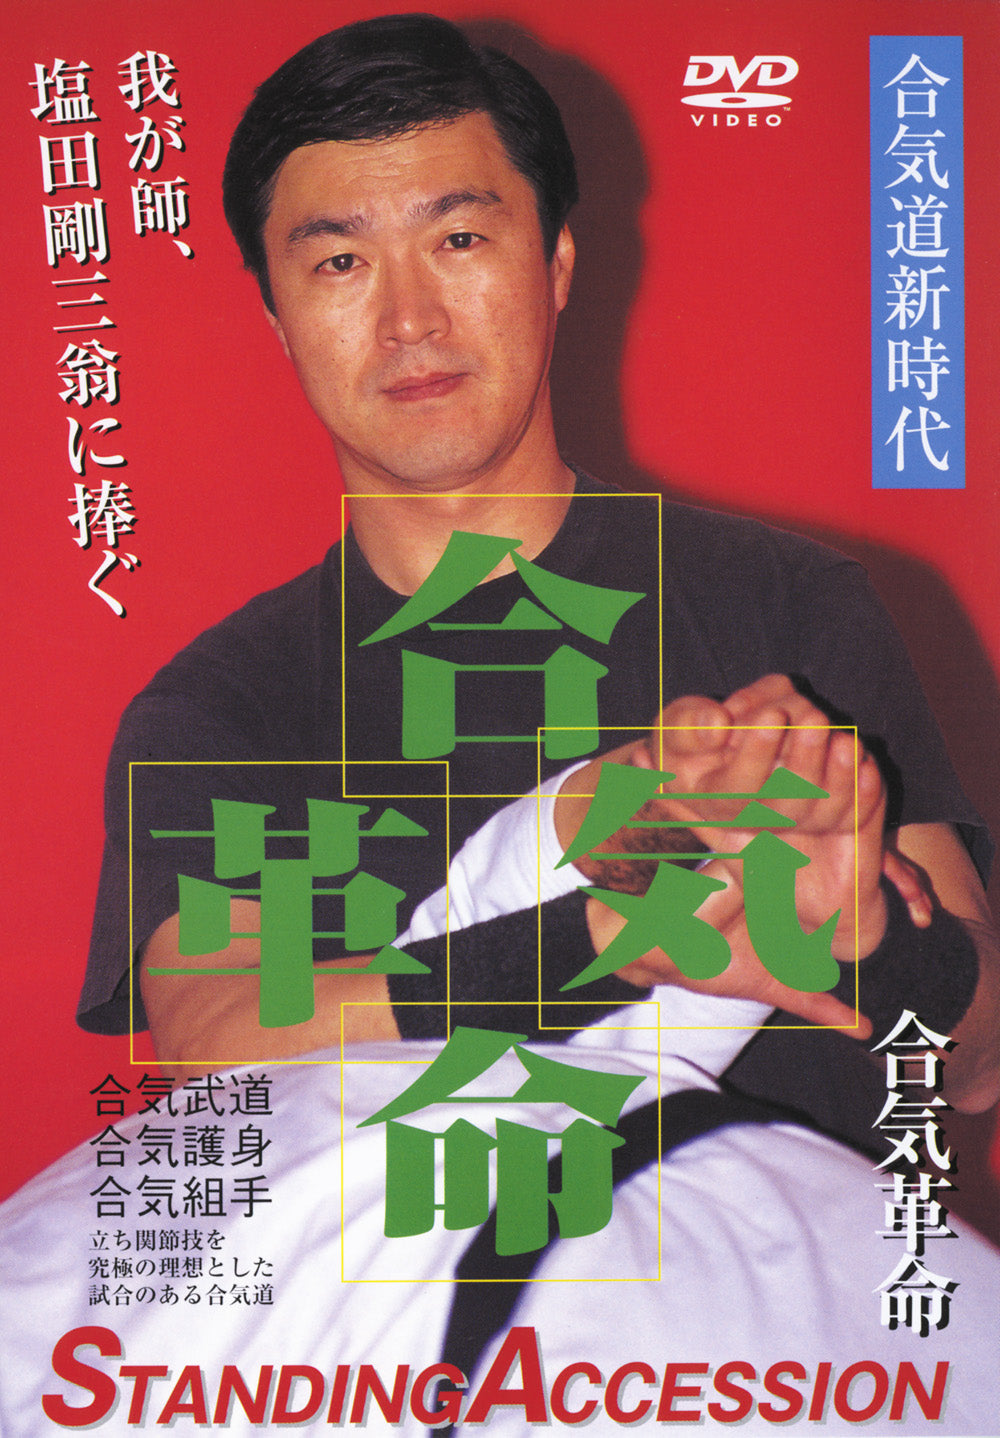 Shoot Aikido: Real Techniques DVD 1 by Fumio Sakurai